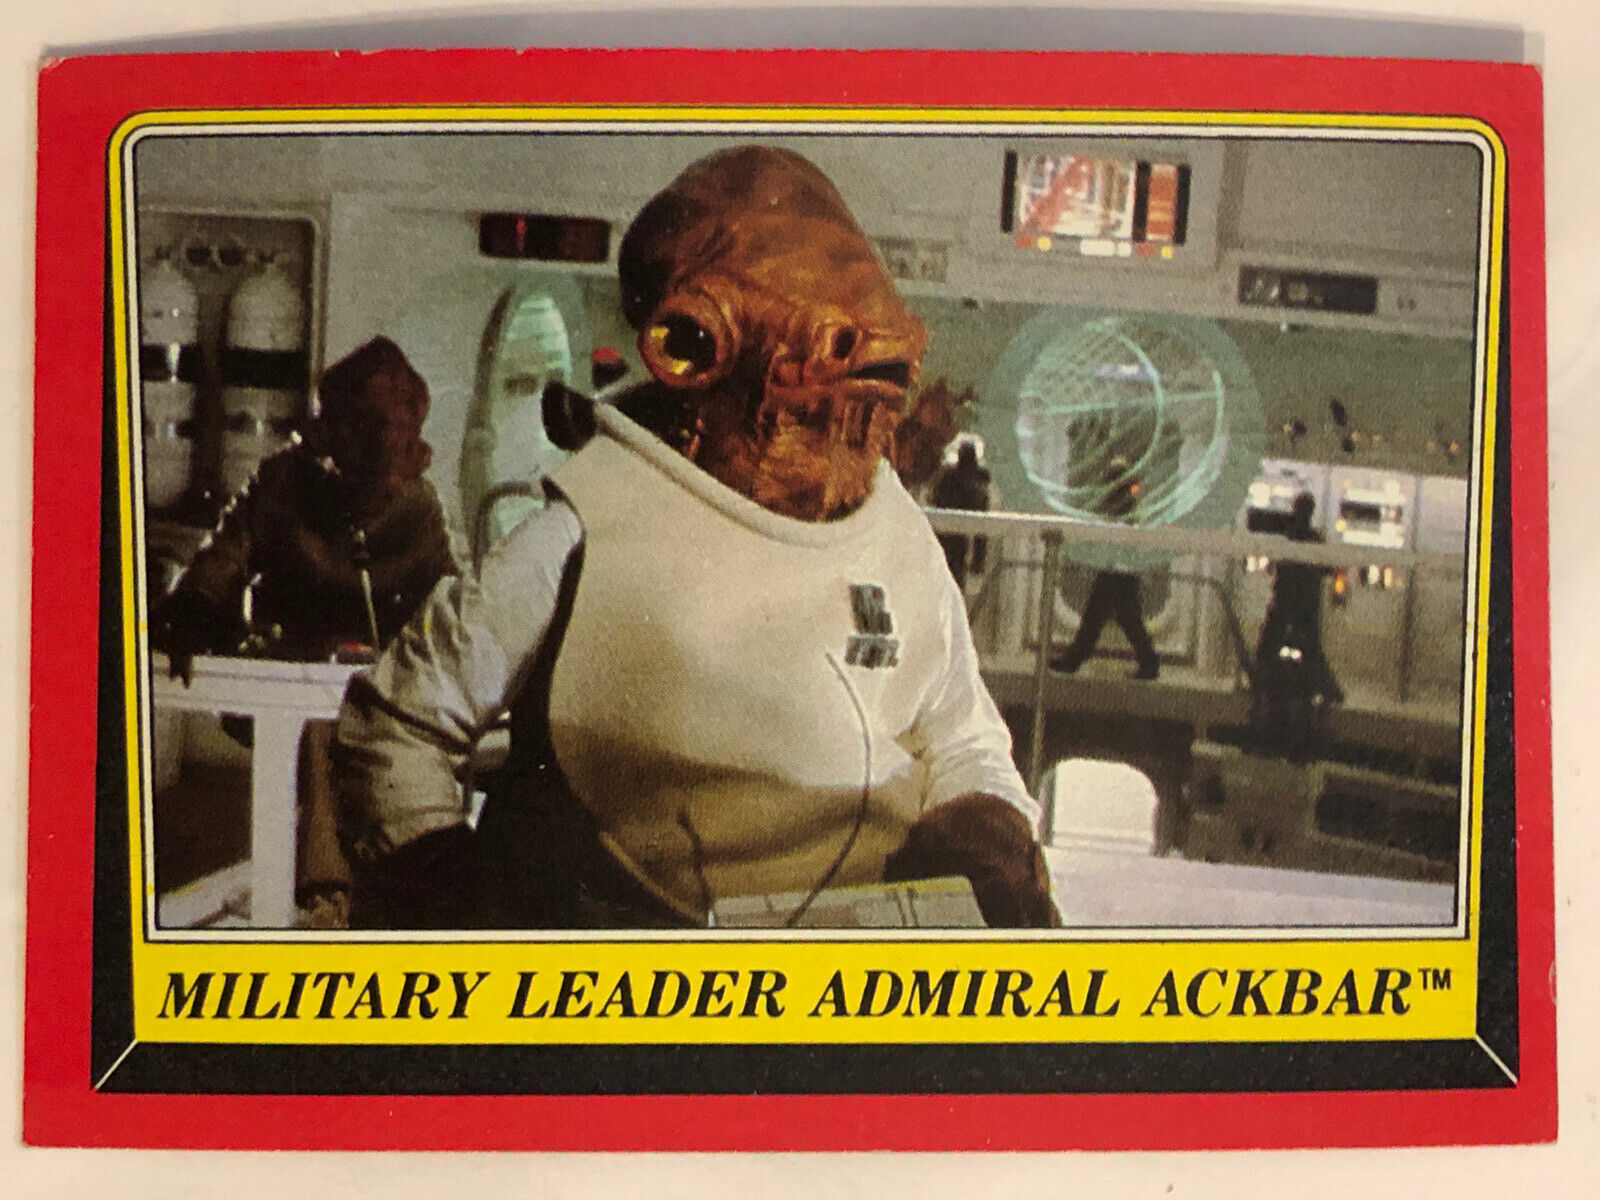 Vintage Star Wars Return of the Jedi trading card #124 Military Admiral Ackbar